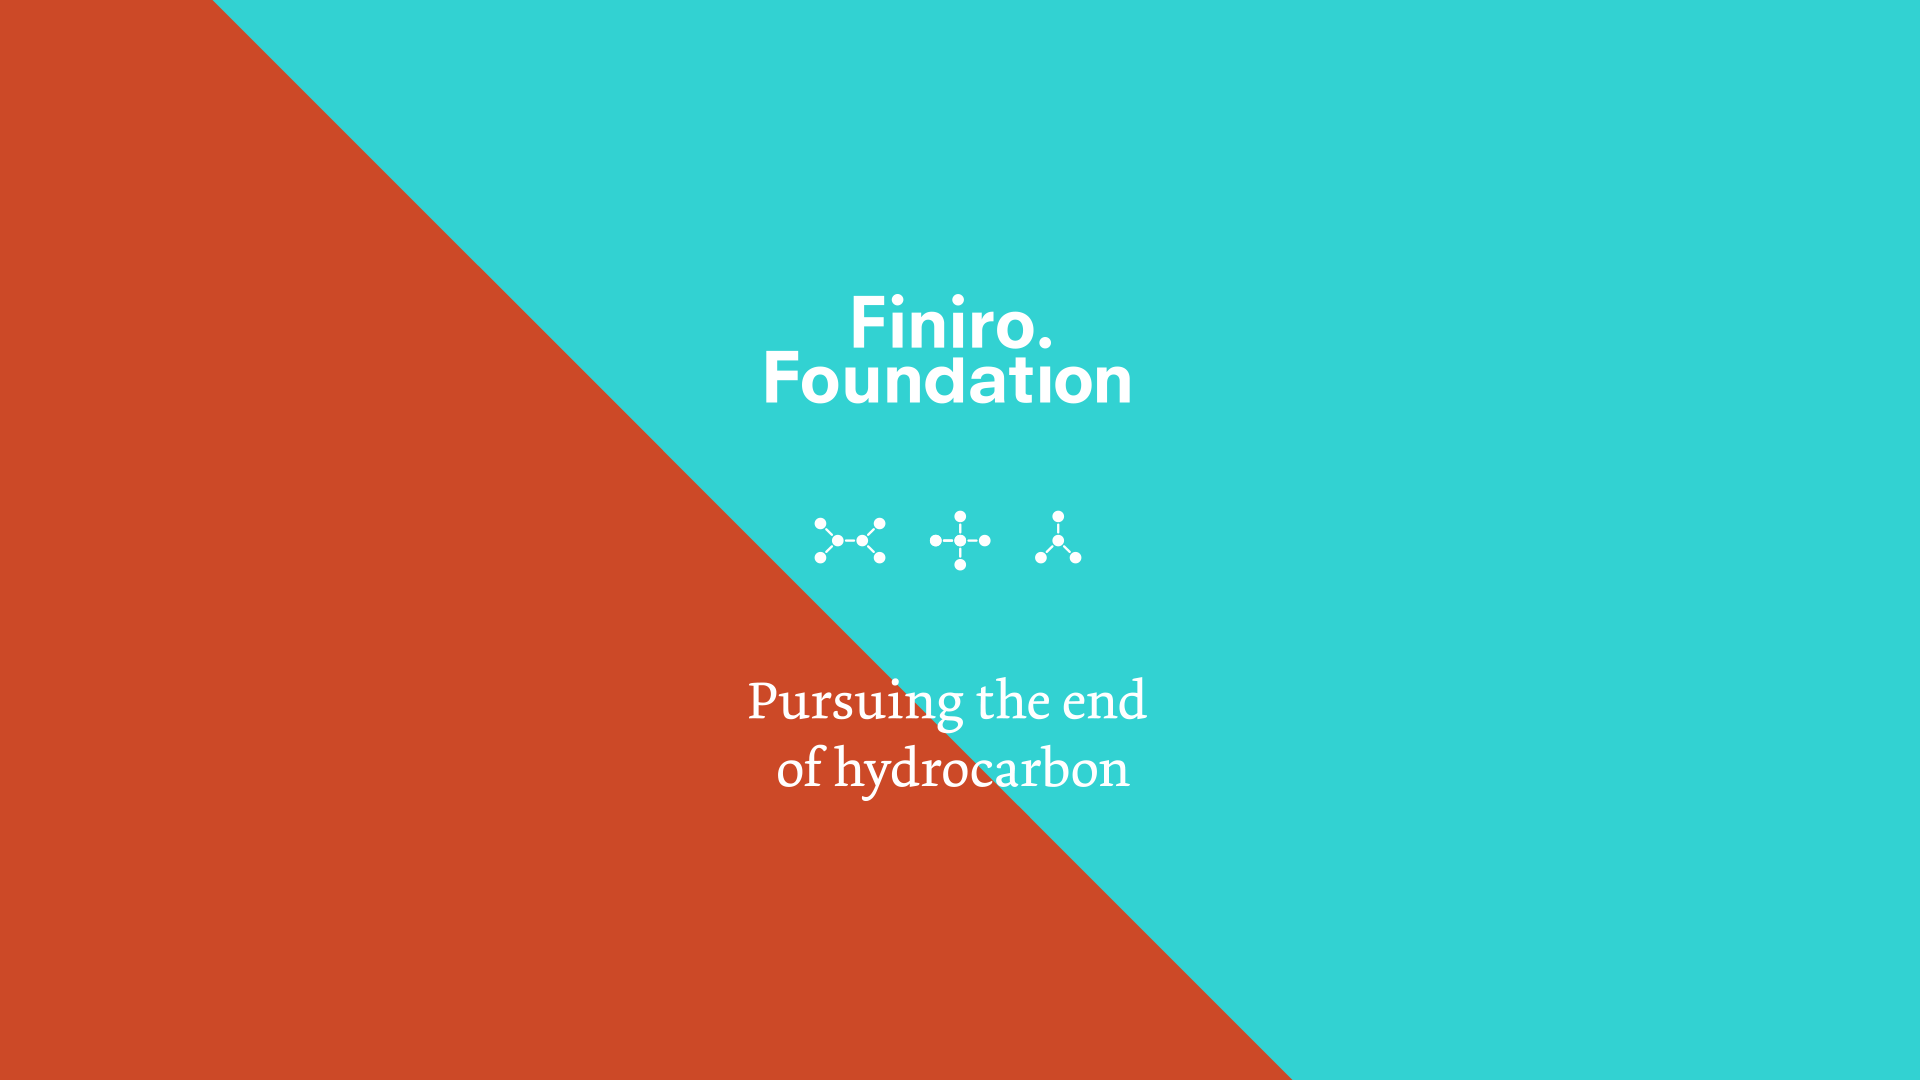 Finiro Foundation, brand identity